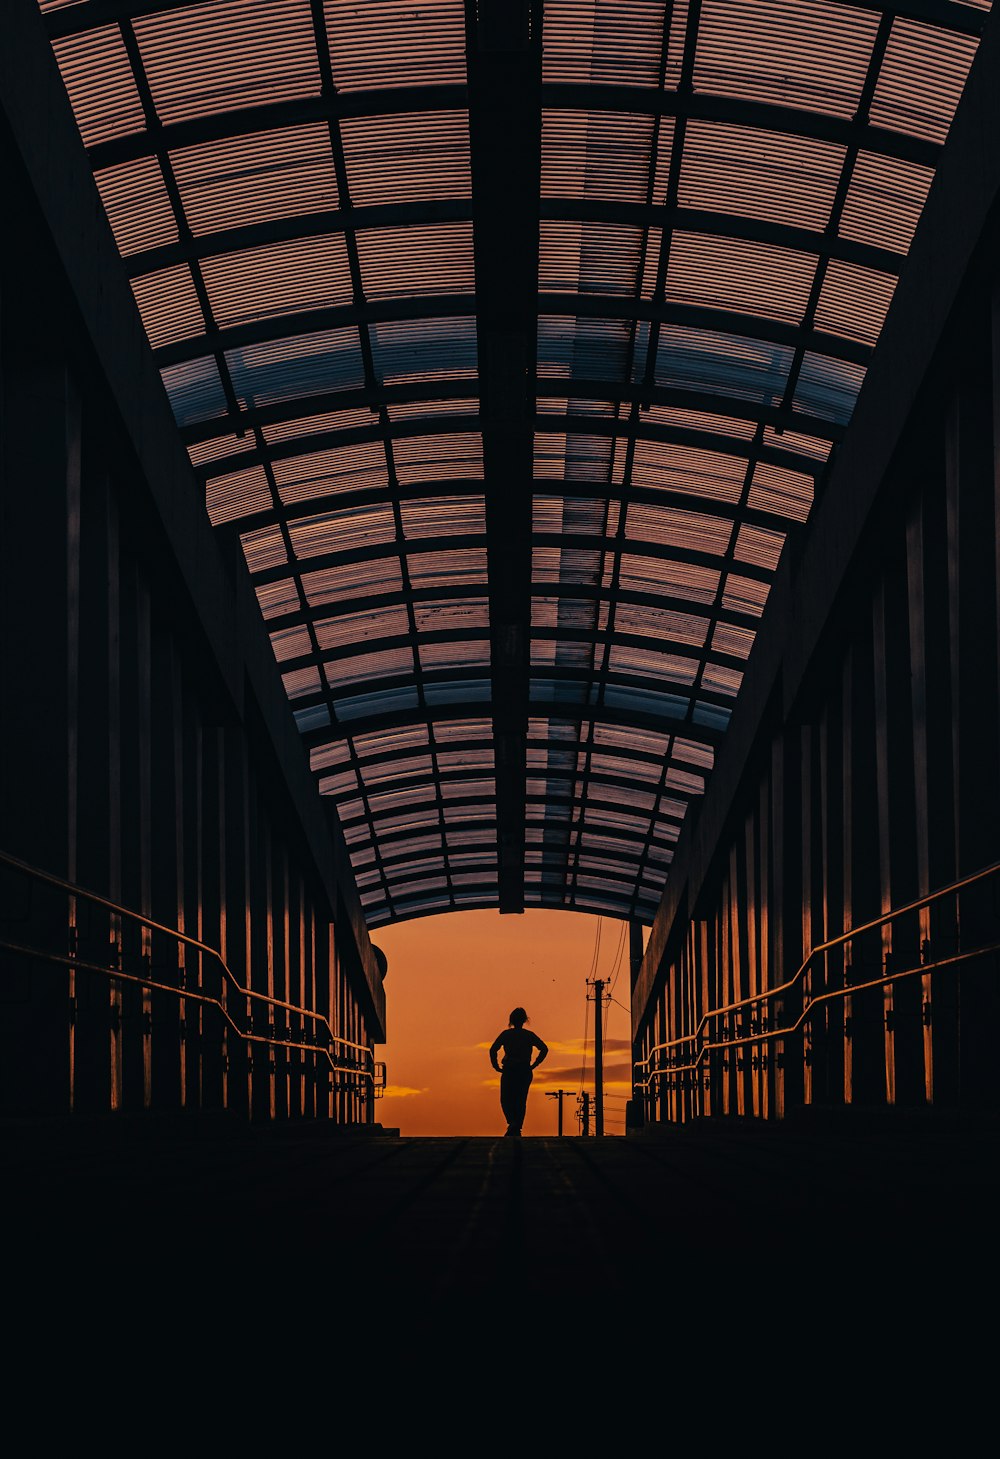 una siluetta di una persona in piedi in una stazione ferroviaria